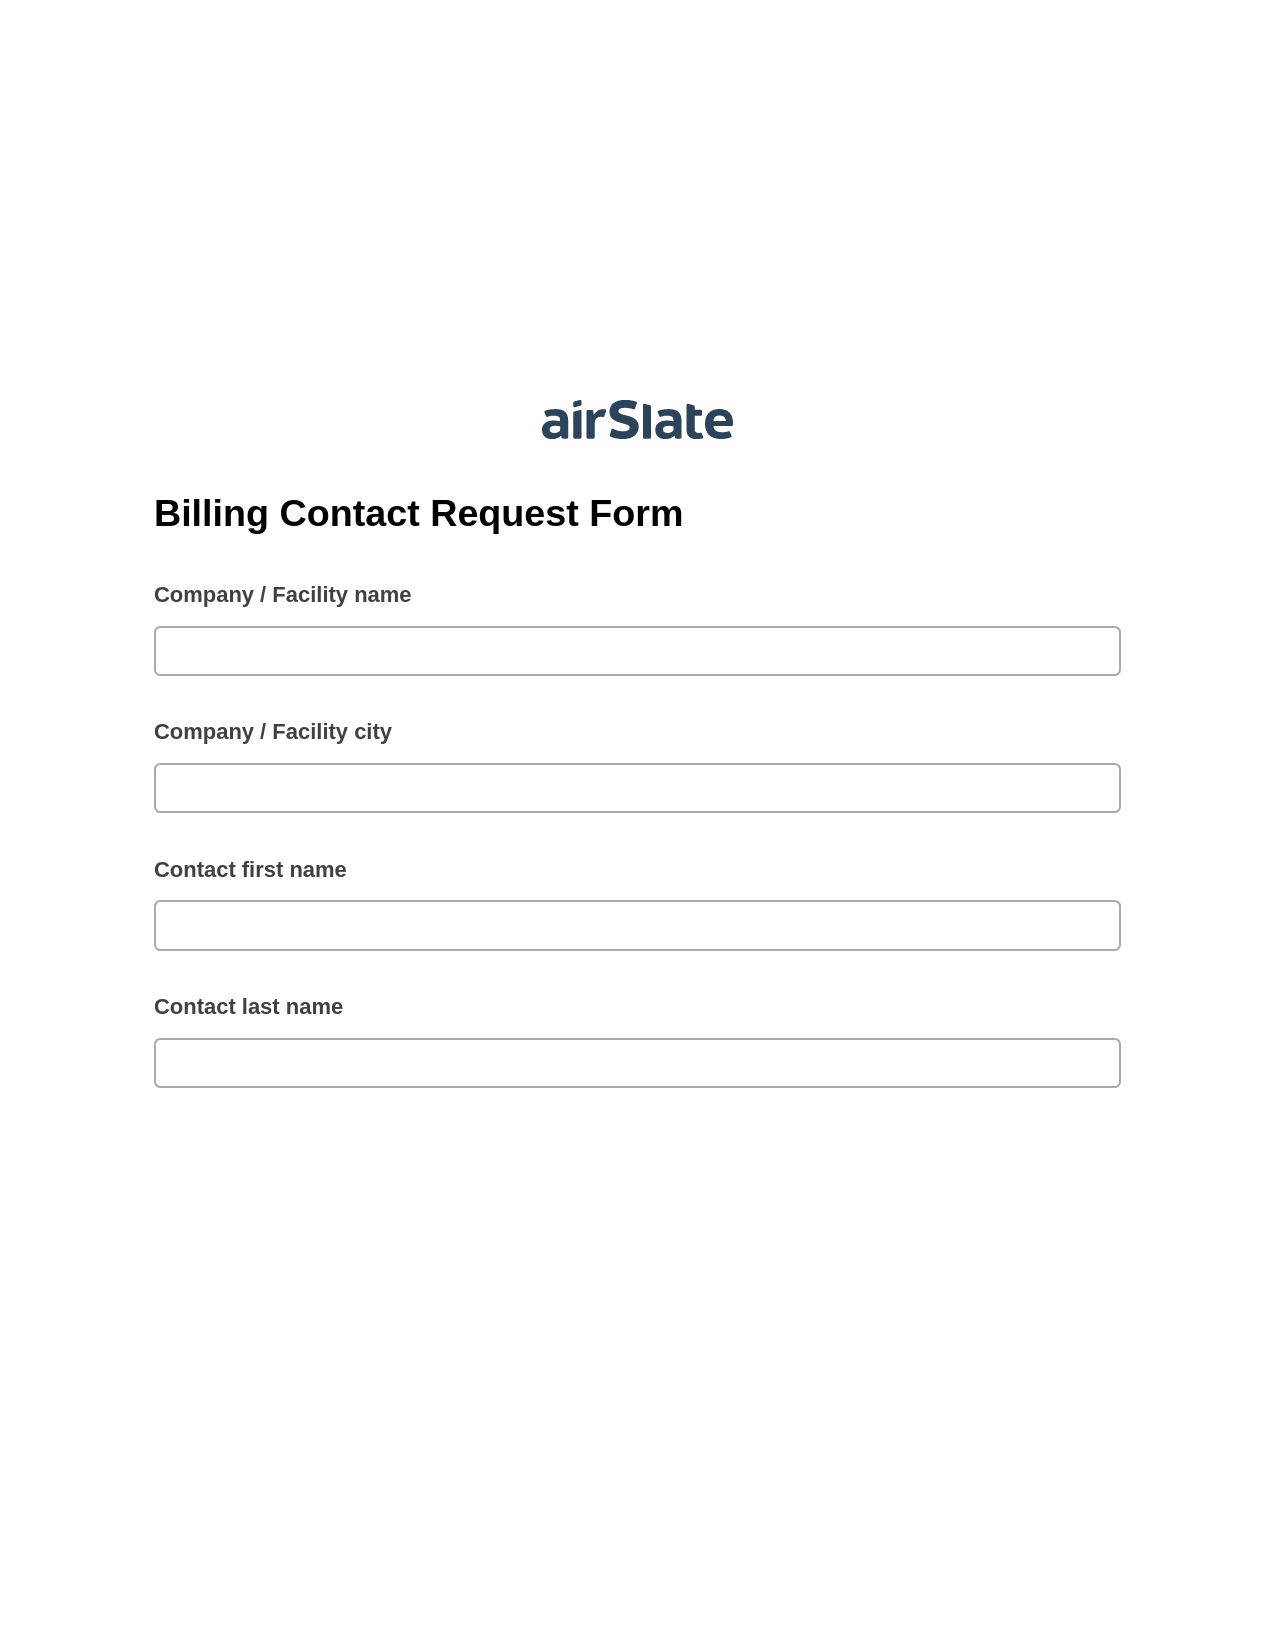 Billing Contact Request Form Pre-fill from CSV File Bot, SendGrid send Campaign bot, Slack Notification Postfinish Bot